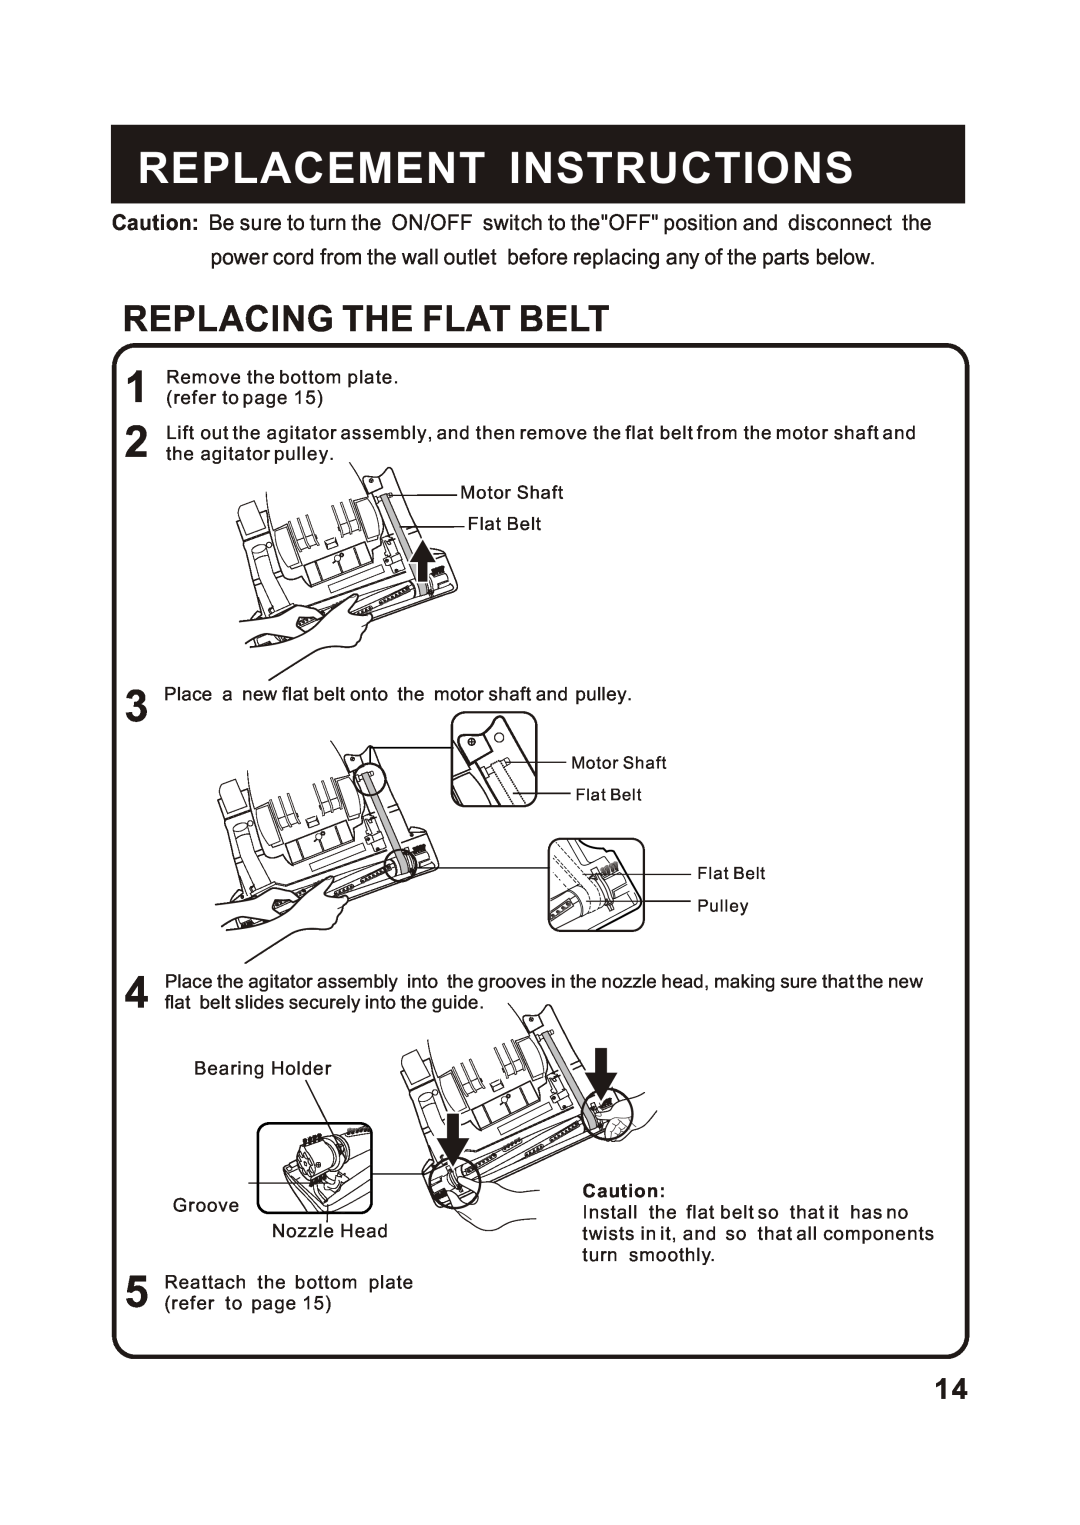 Fantom Vacuum FM788HG, FM788HB, FM788HC instruction manual Replacing The Flat Belt, Replacement Instructions 